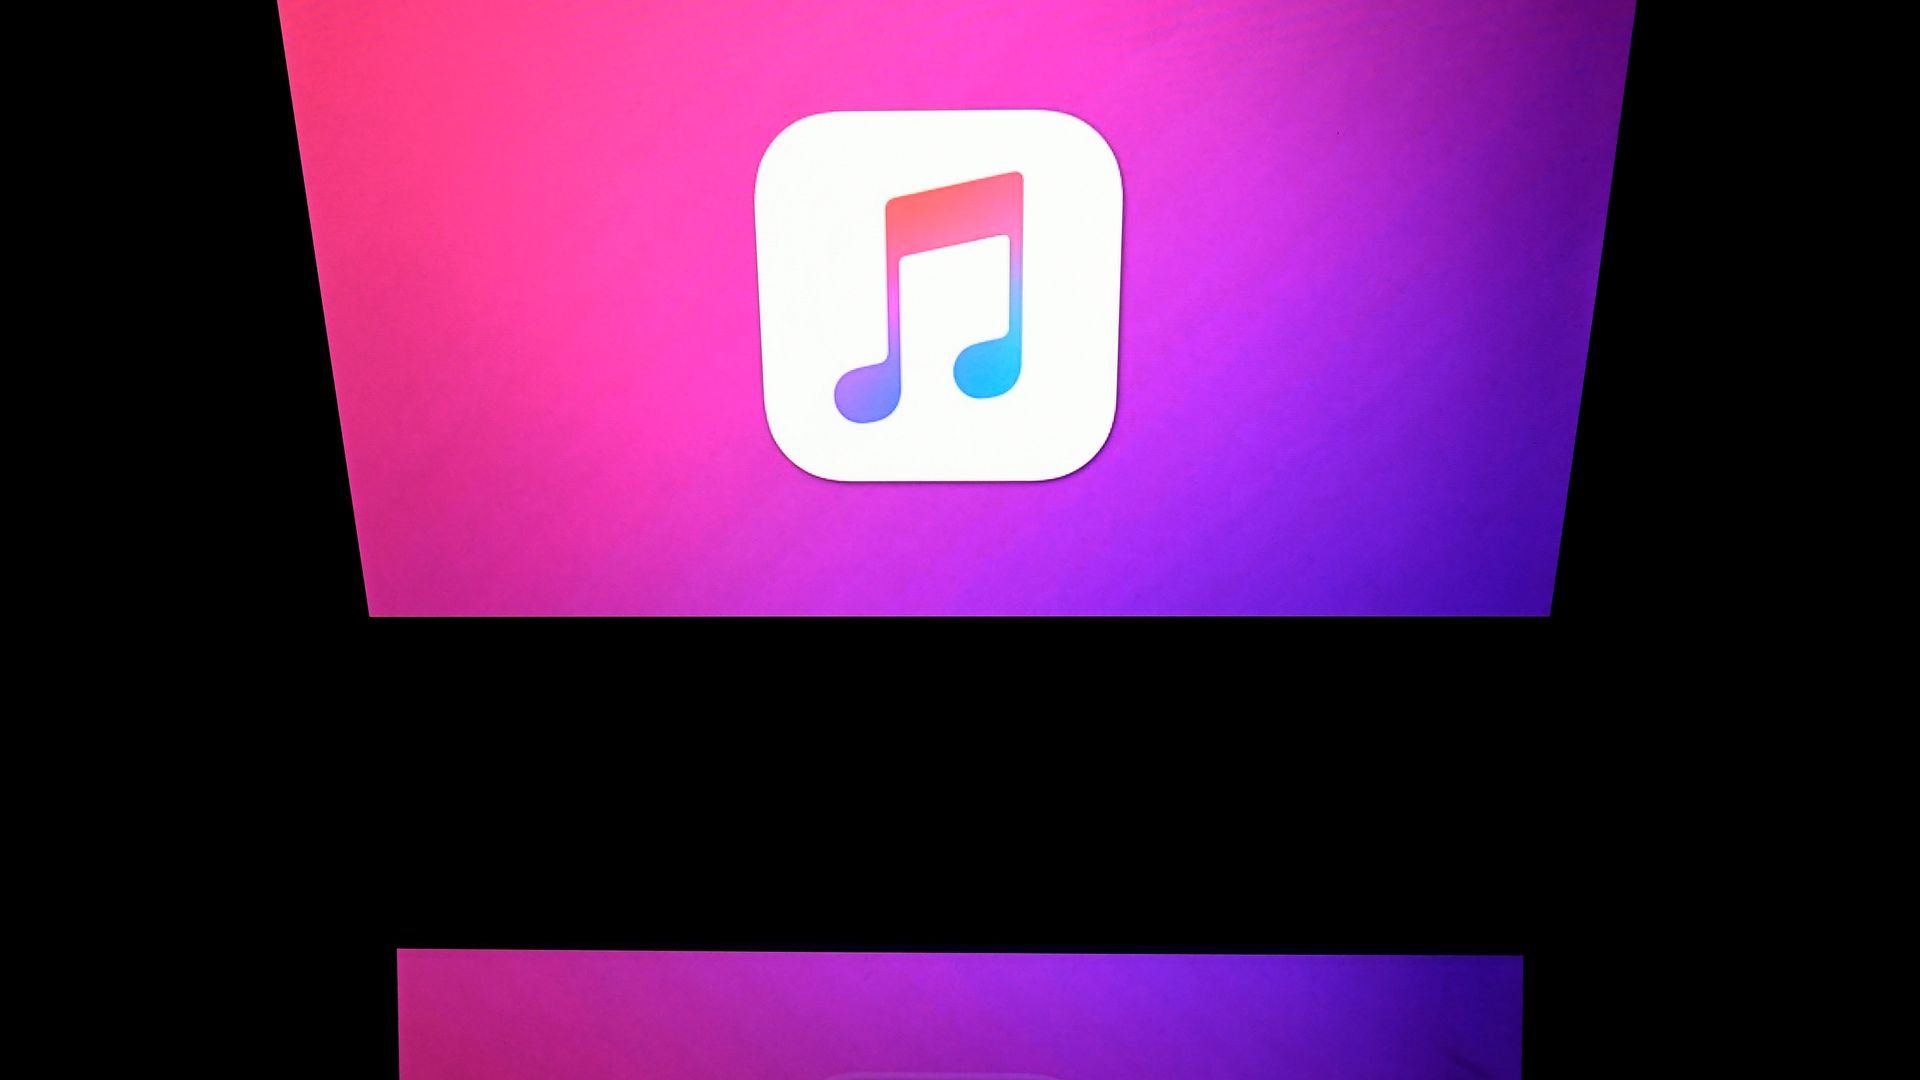 The iTunes logo